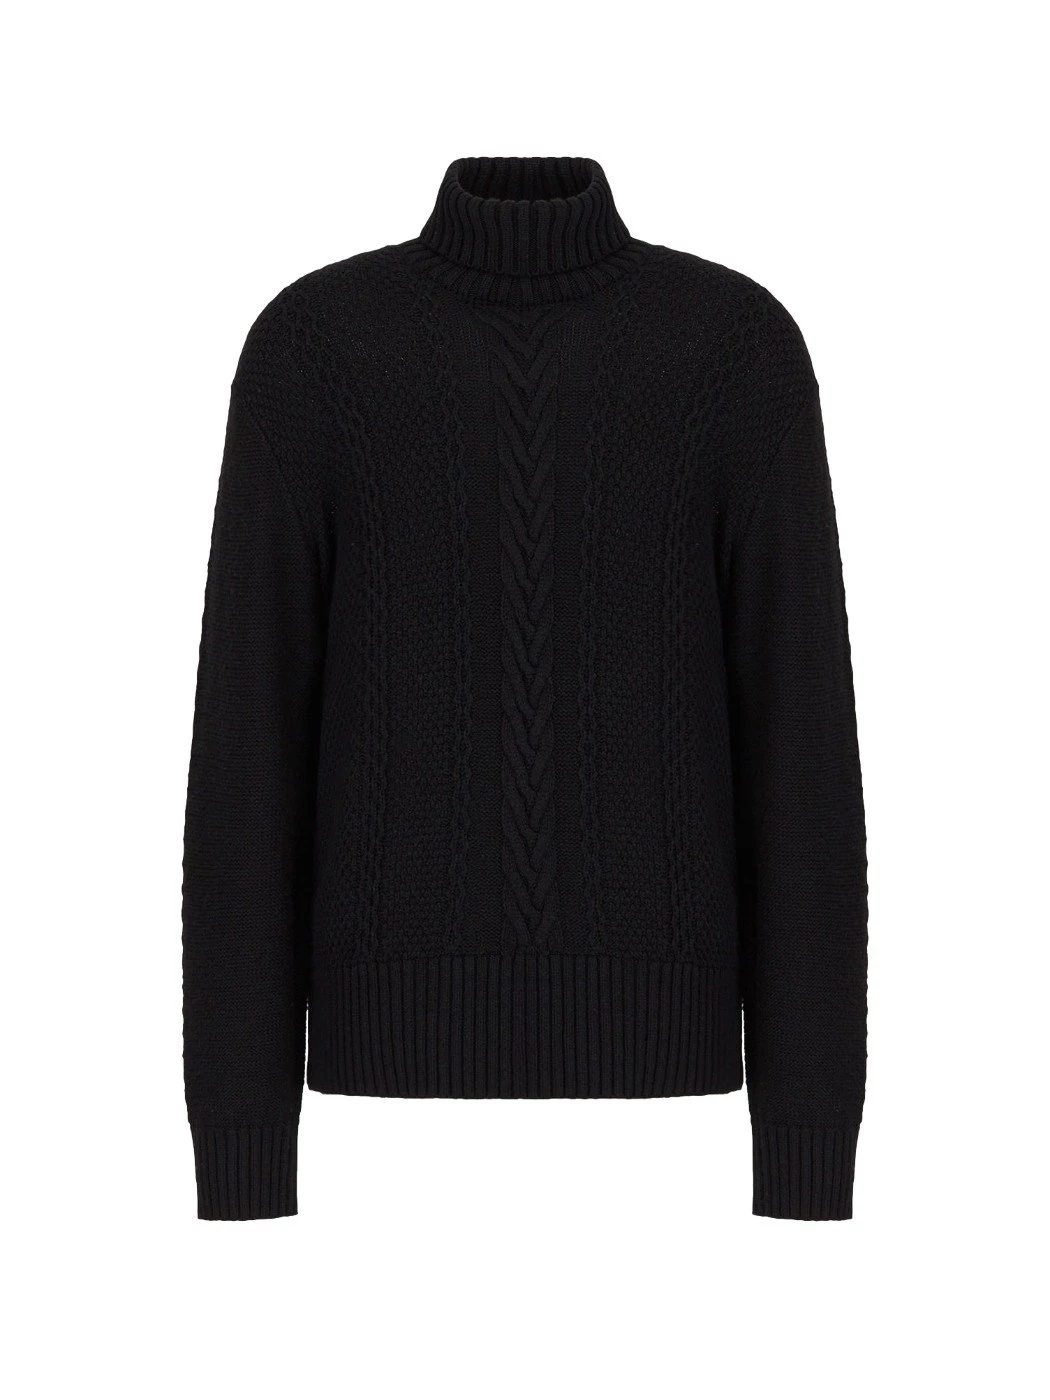 Armani Exchange high collar sweater